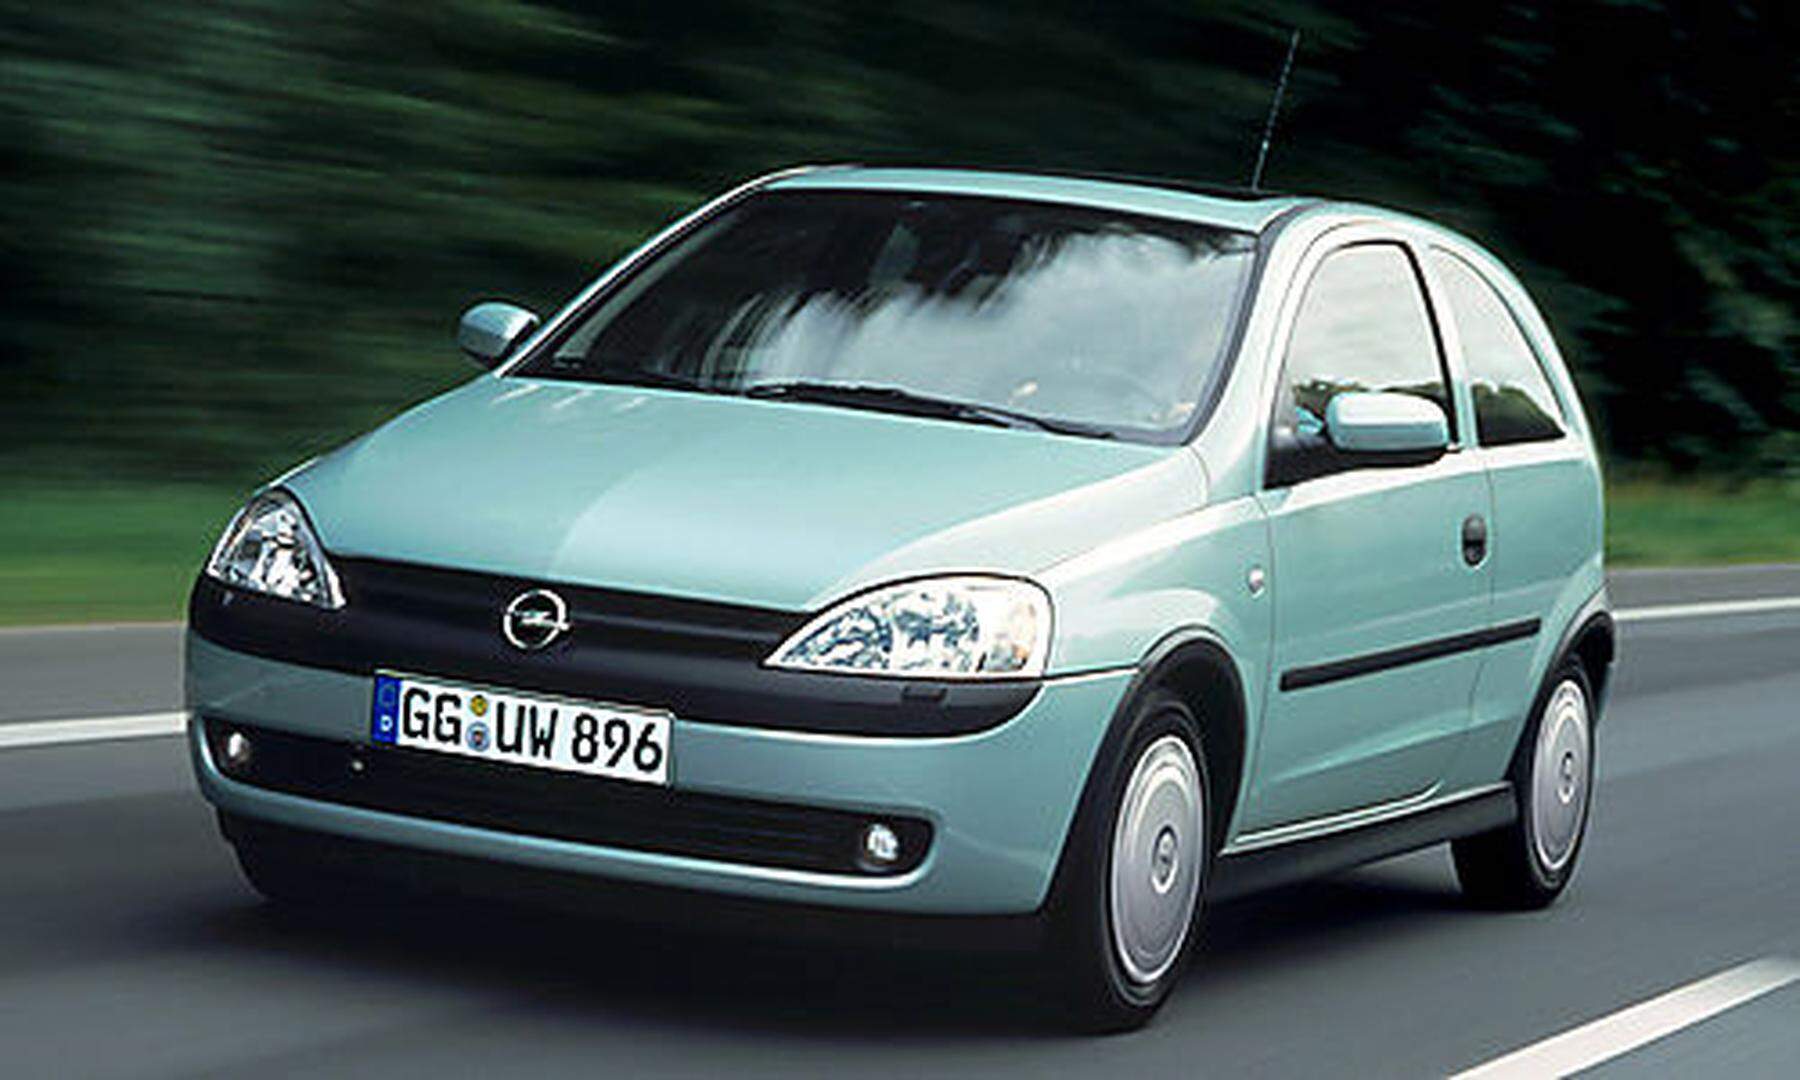 https://img.kleinezeitung.at/public/incoming/eoim2h-Opel-corsa-c-2000-2003-opel-corsa-c-2000-2003-photo-07-car-in_1407270223025512_v0_h.jpg/alternates/ORIGINAL/Opel-corsa-c-2000-2003-opel-corsa-c-2000-2003-photo-07-car-in_1407270223025512_v0_h.jpg